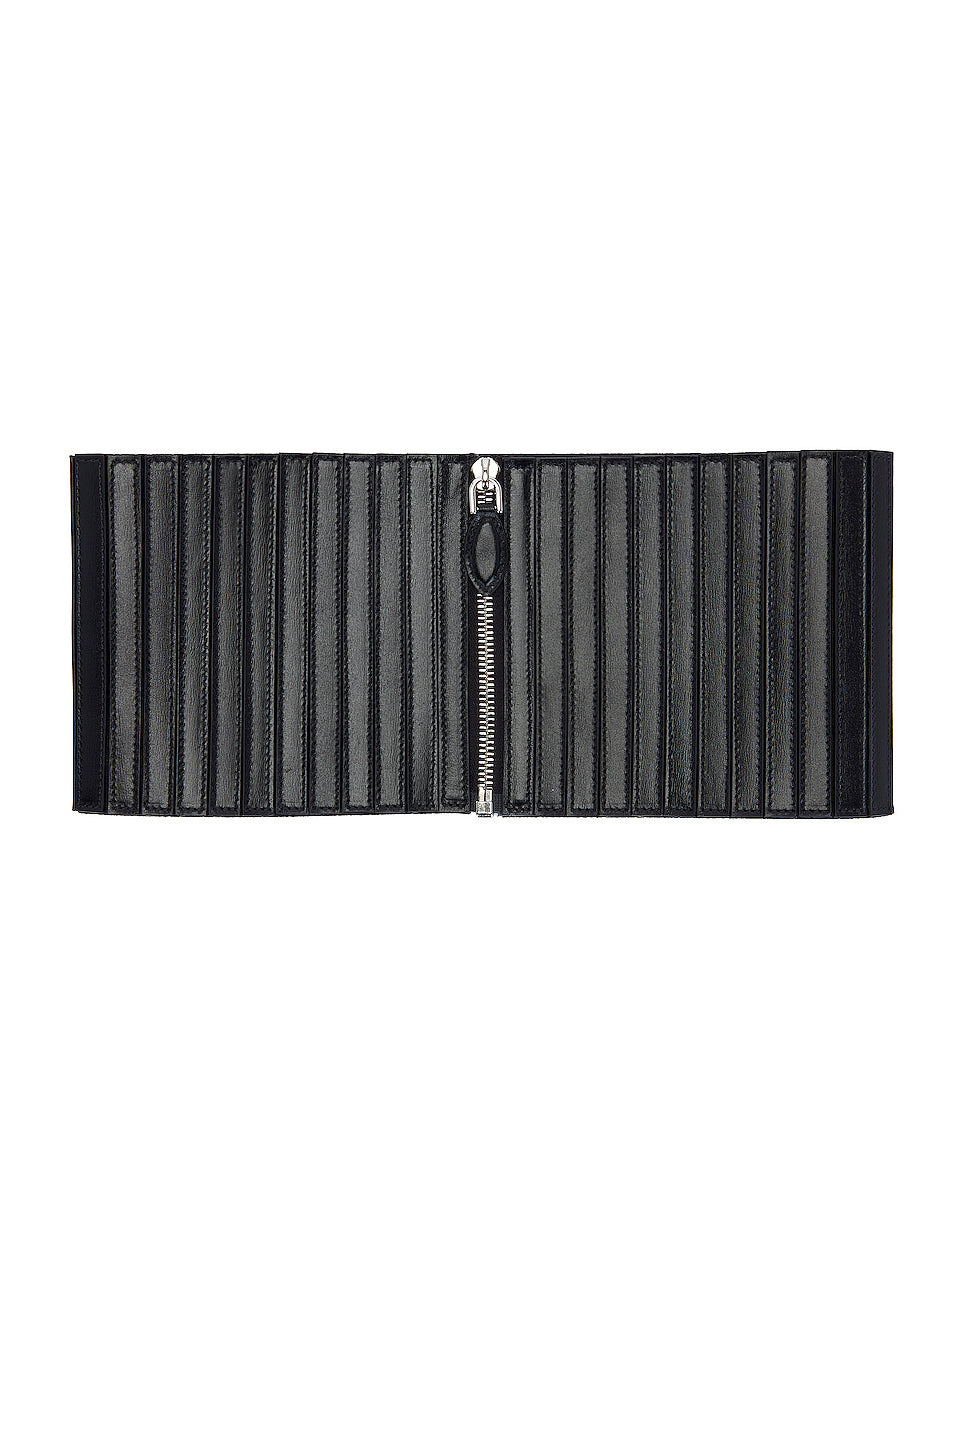 Striped Corset Belt Size: L 